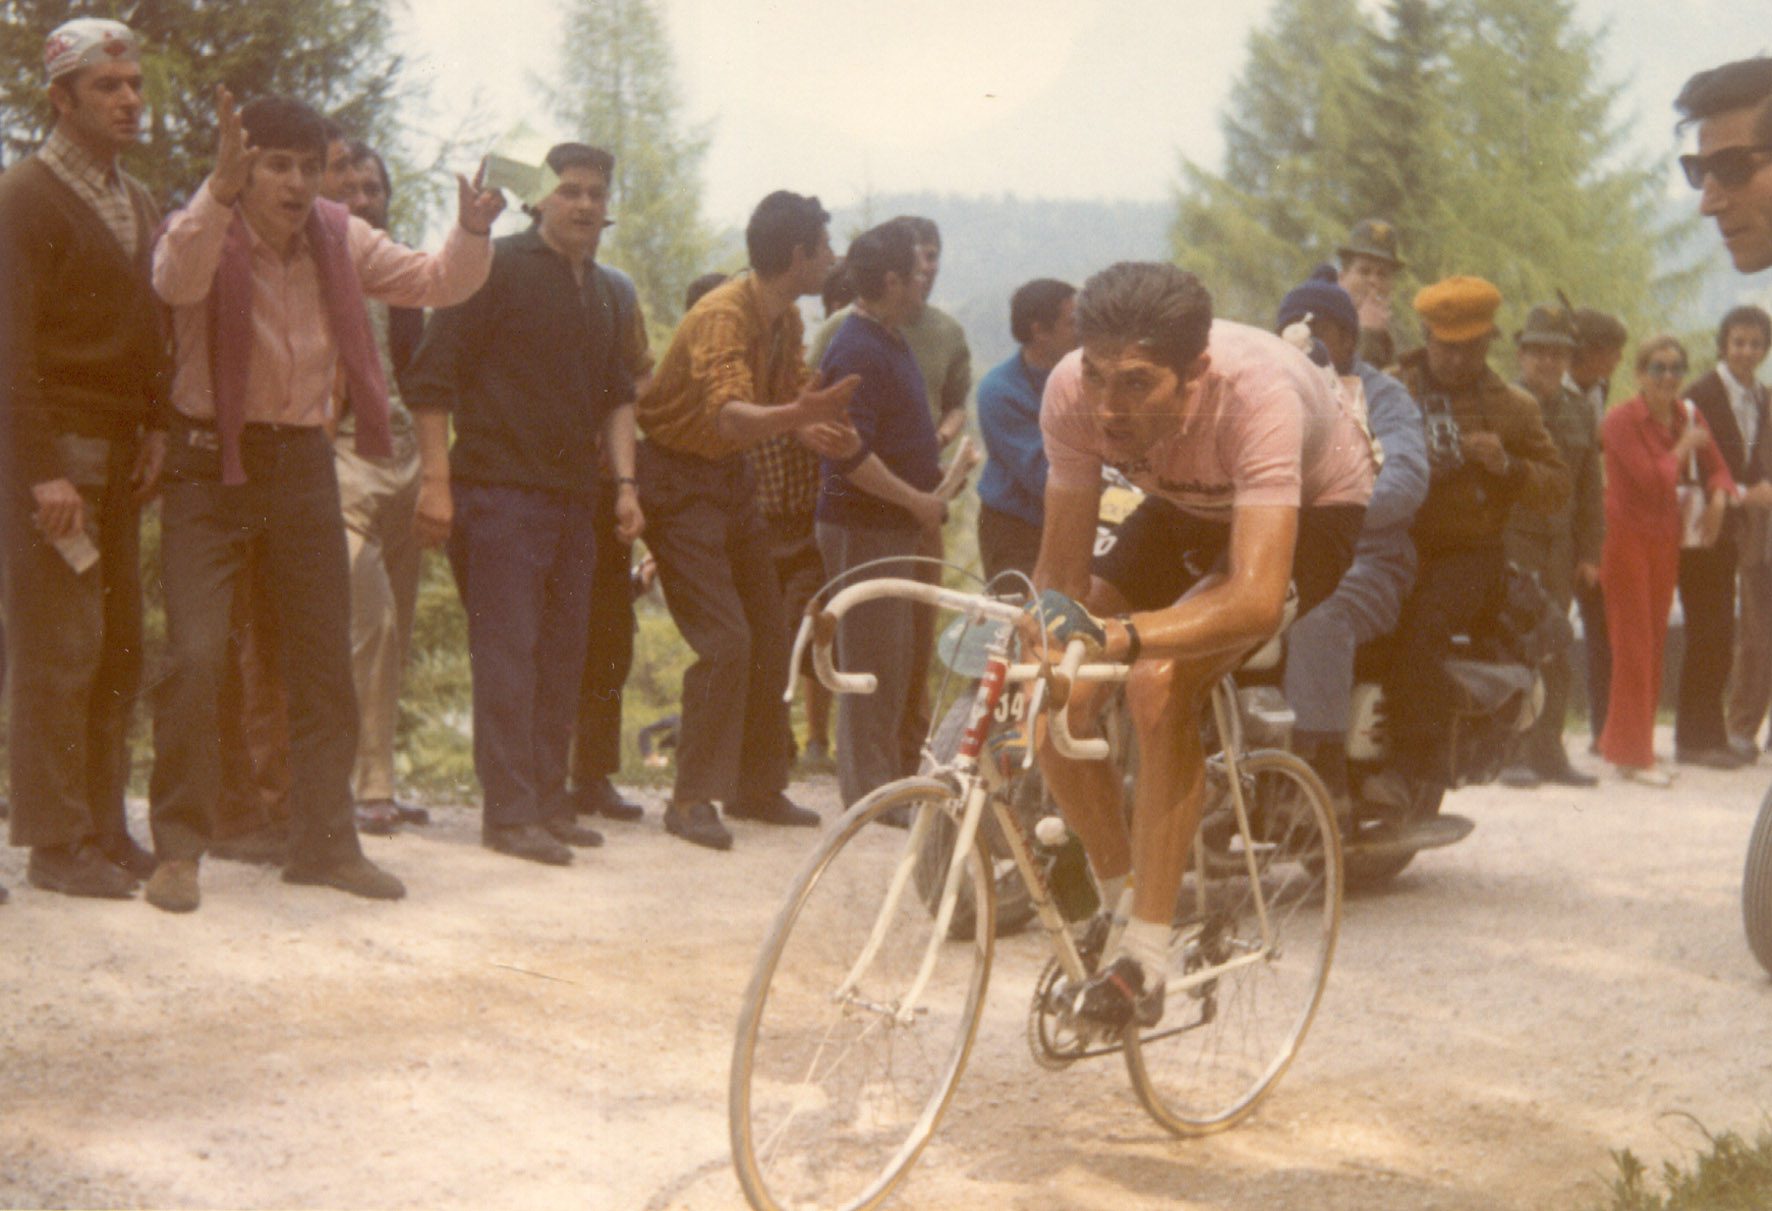 Ciclismo épico, legendario: Bartali, Coppi, Anquetil, Bahamontes, Gaul, Gimondi, Merckx... - Página 2 Merckx70